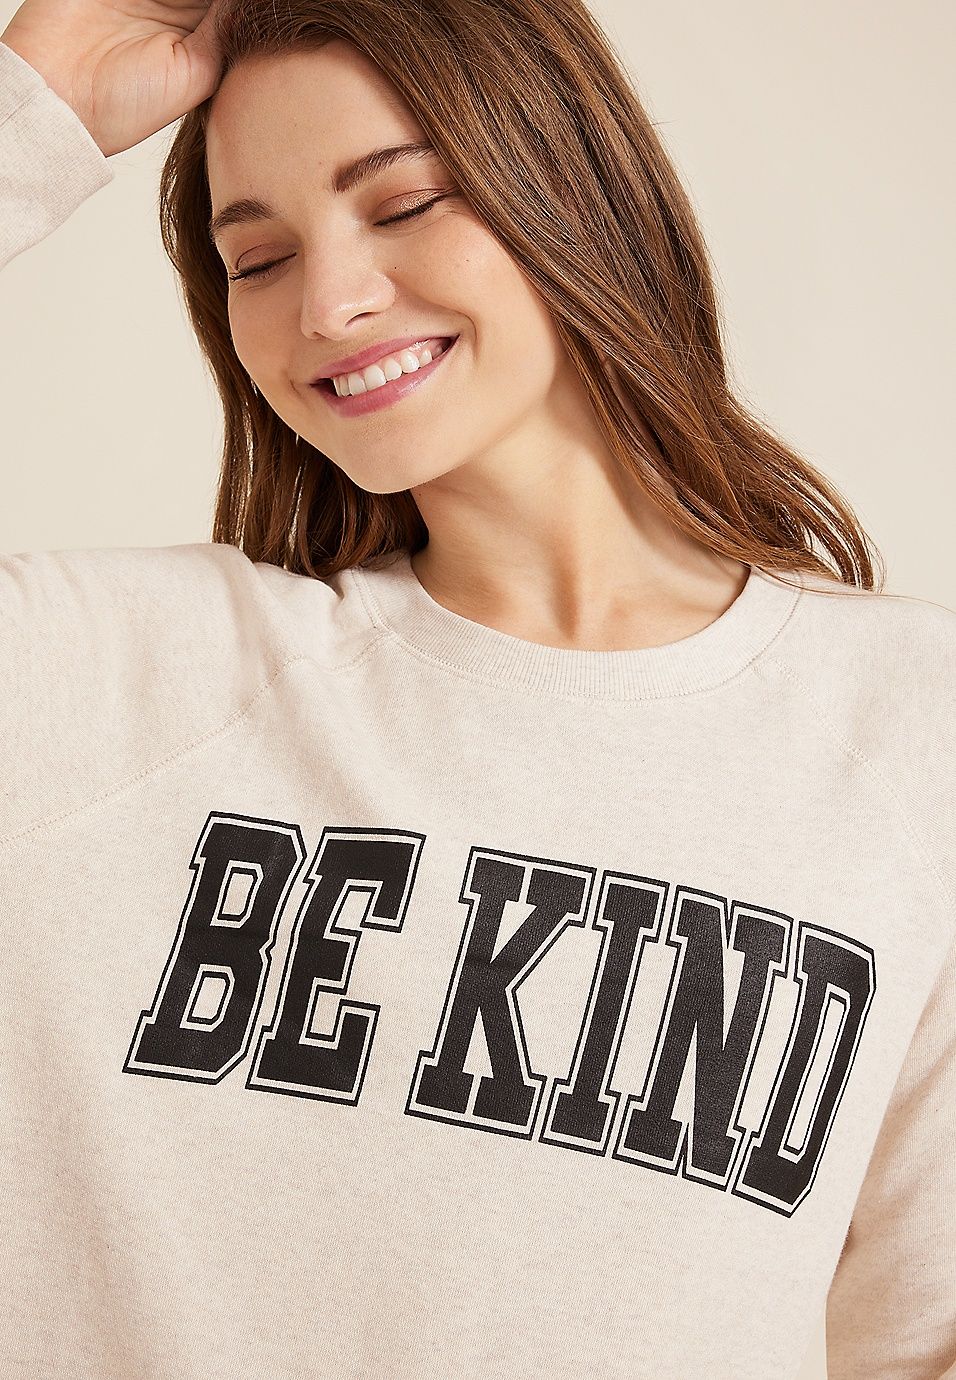 Be Kind Sweatshirt | Maurices